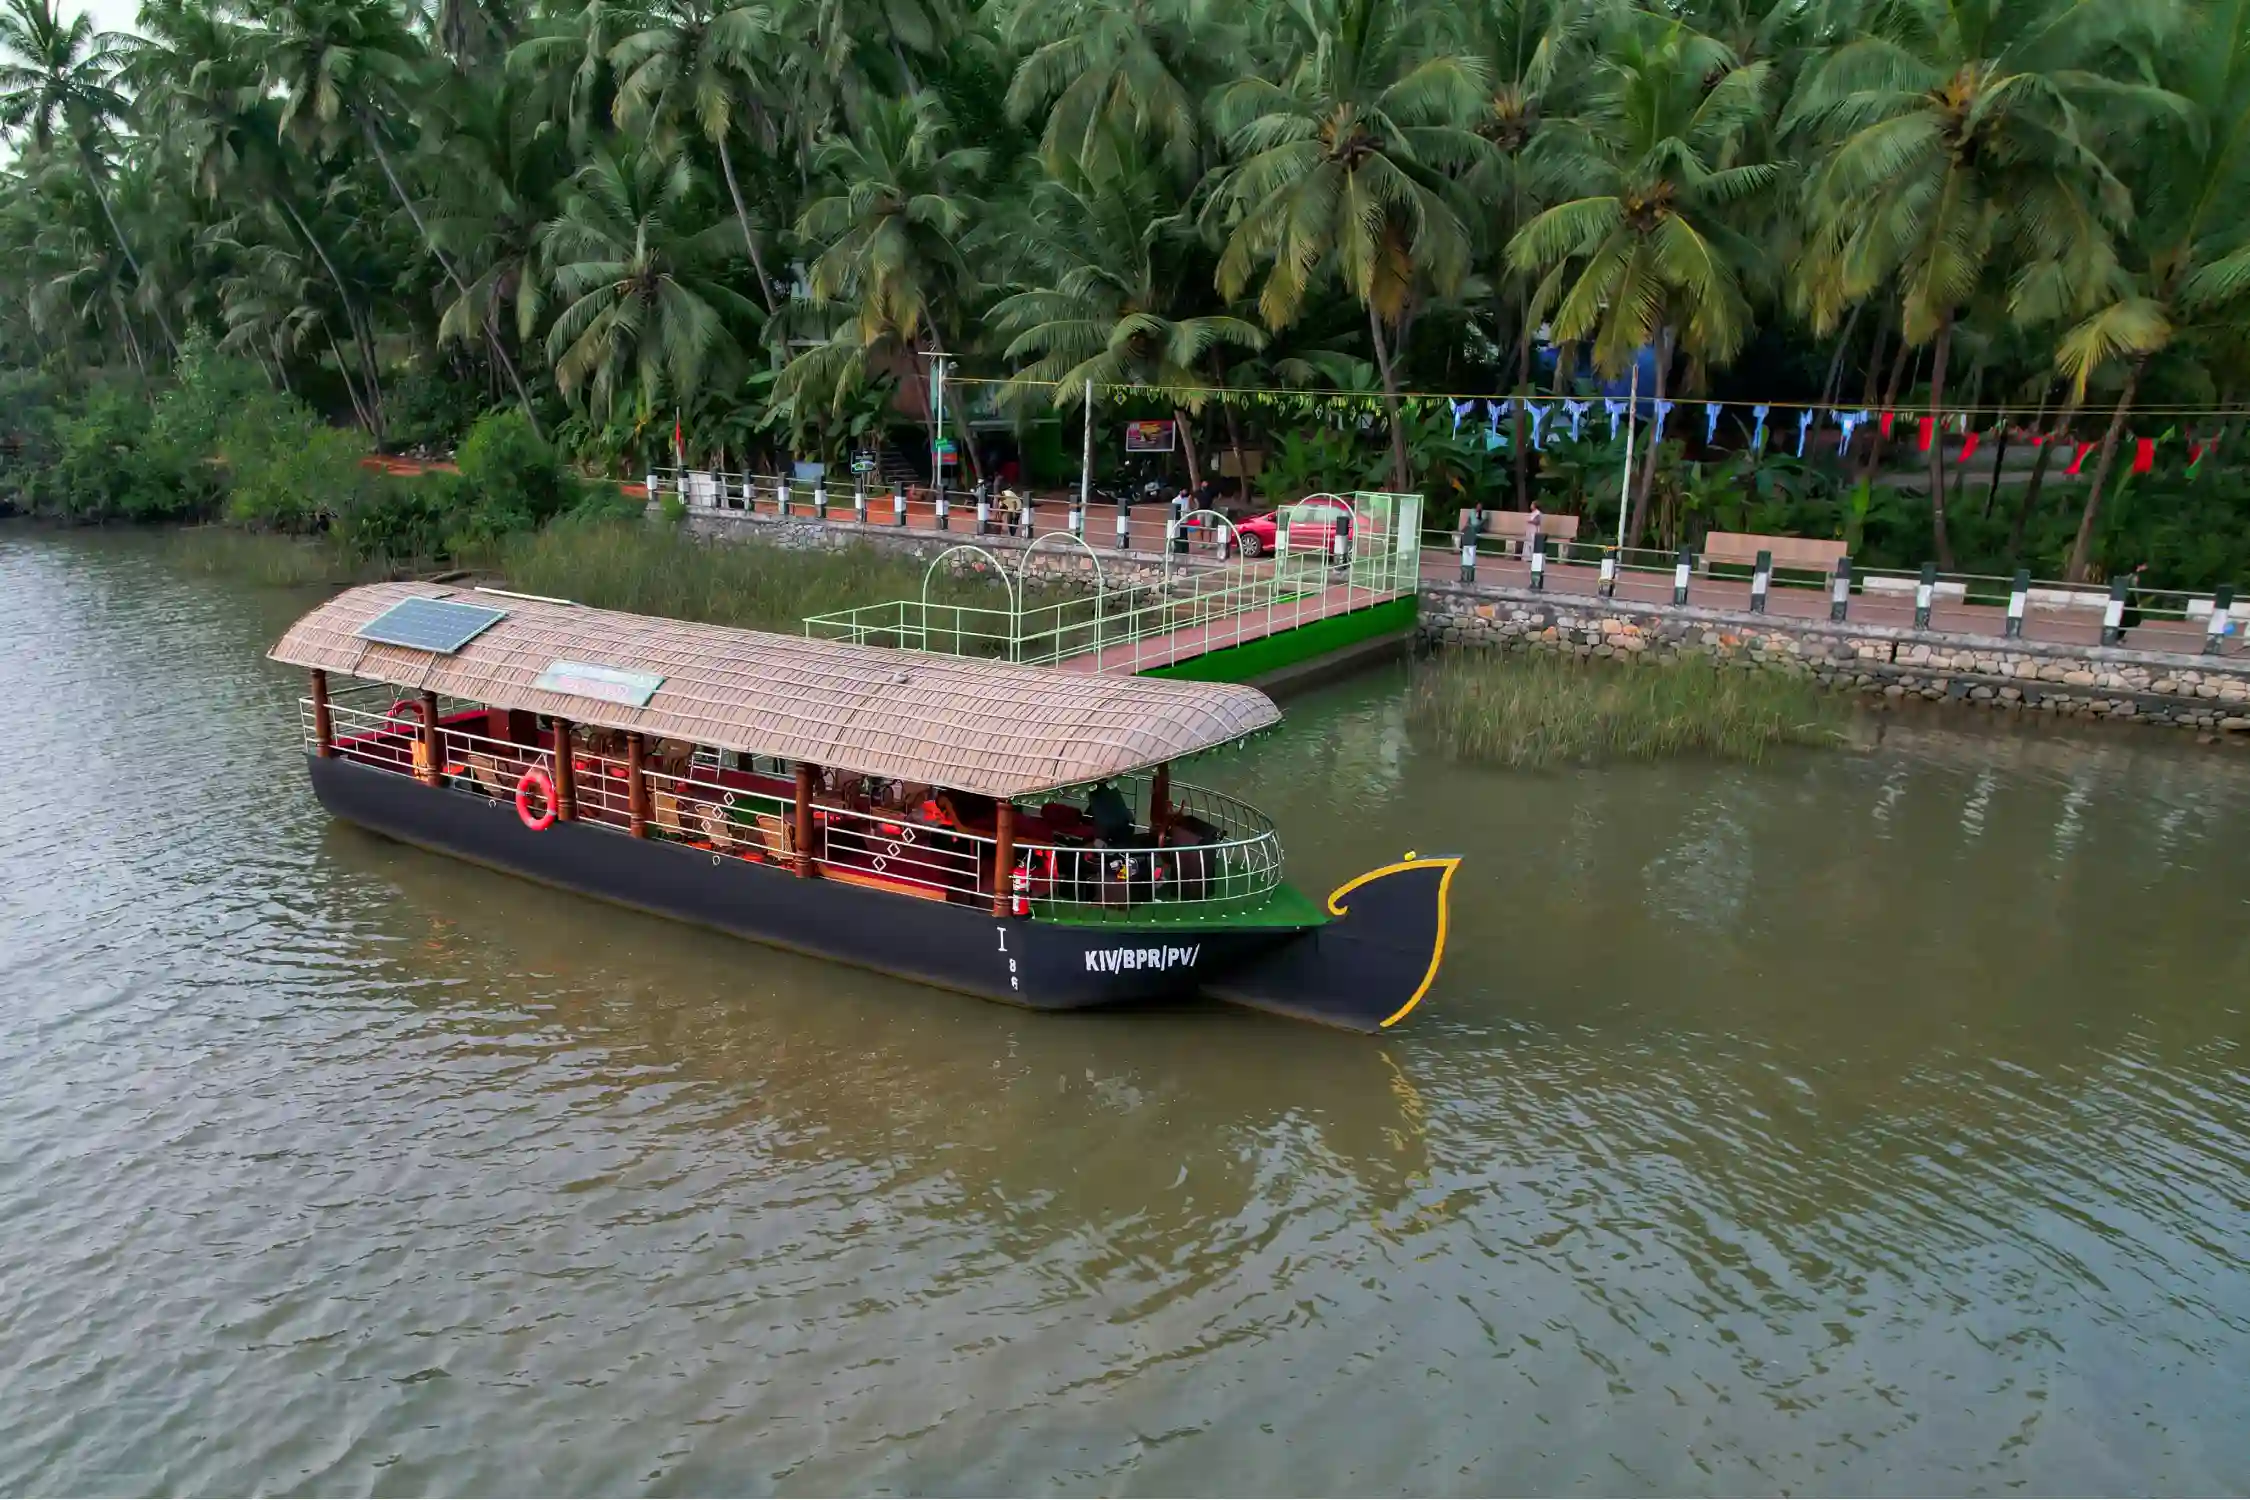 Kozhikode Boat House